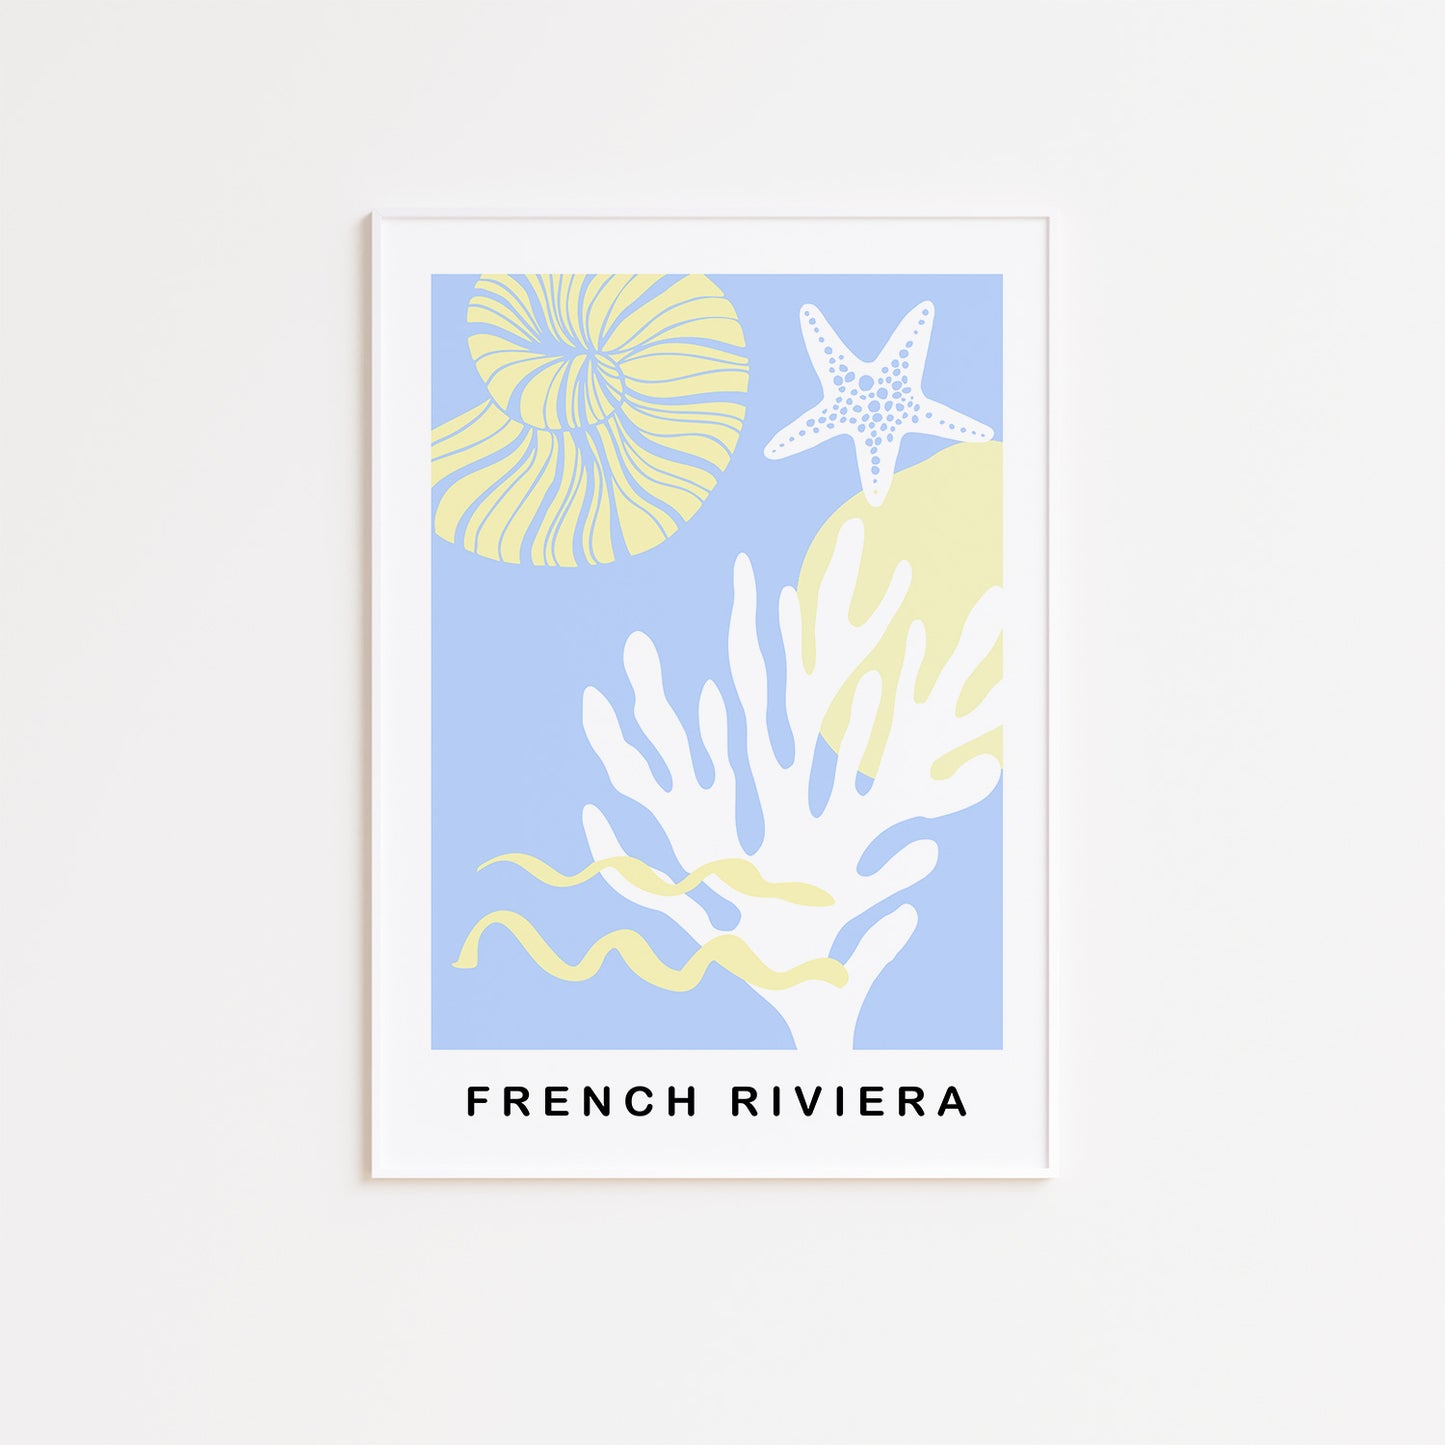 Graphic Riviera Poster